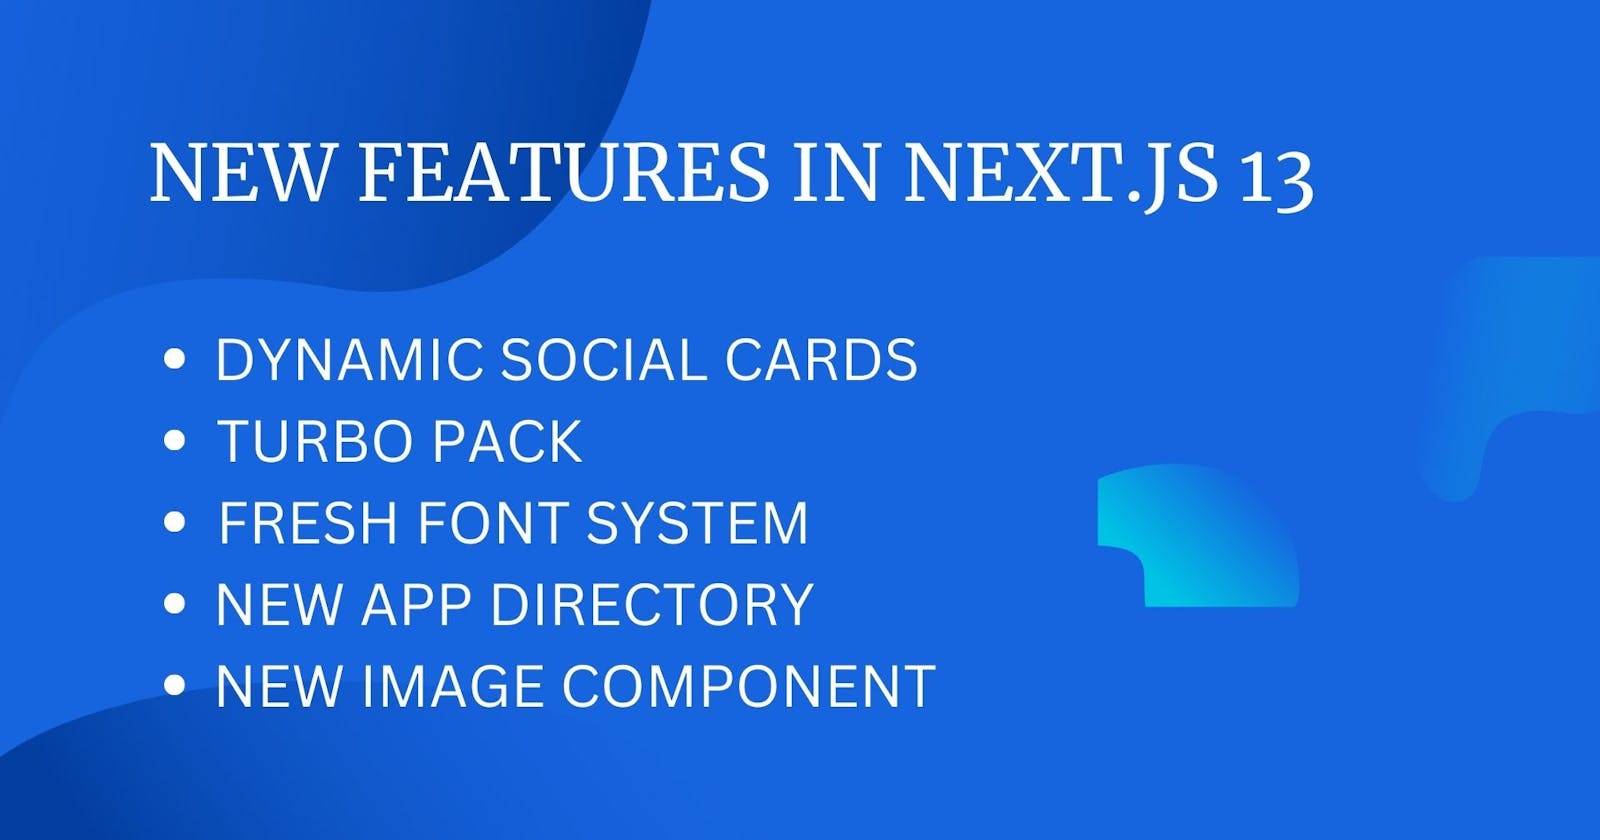 Next.js 13: Get 40% Better Conversions Using Dynamic Social Cards